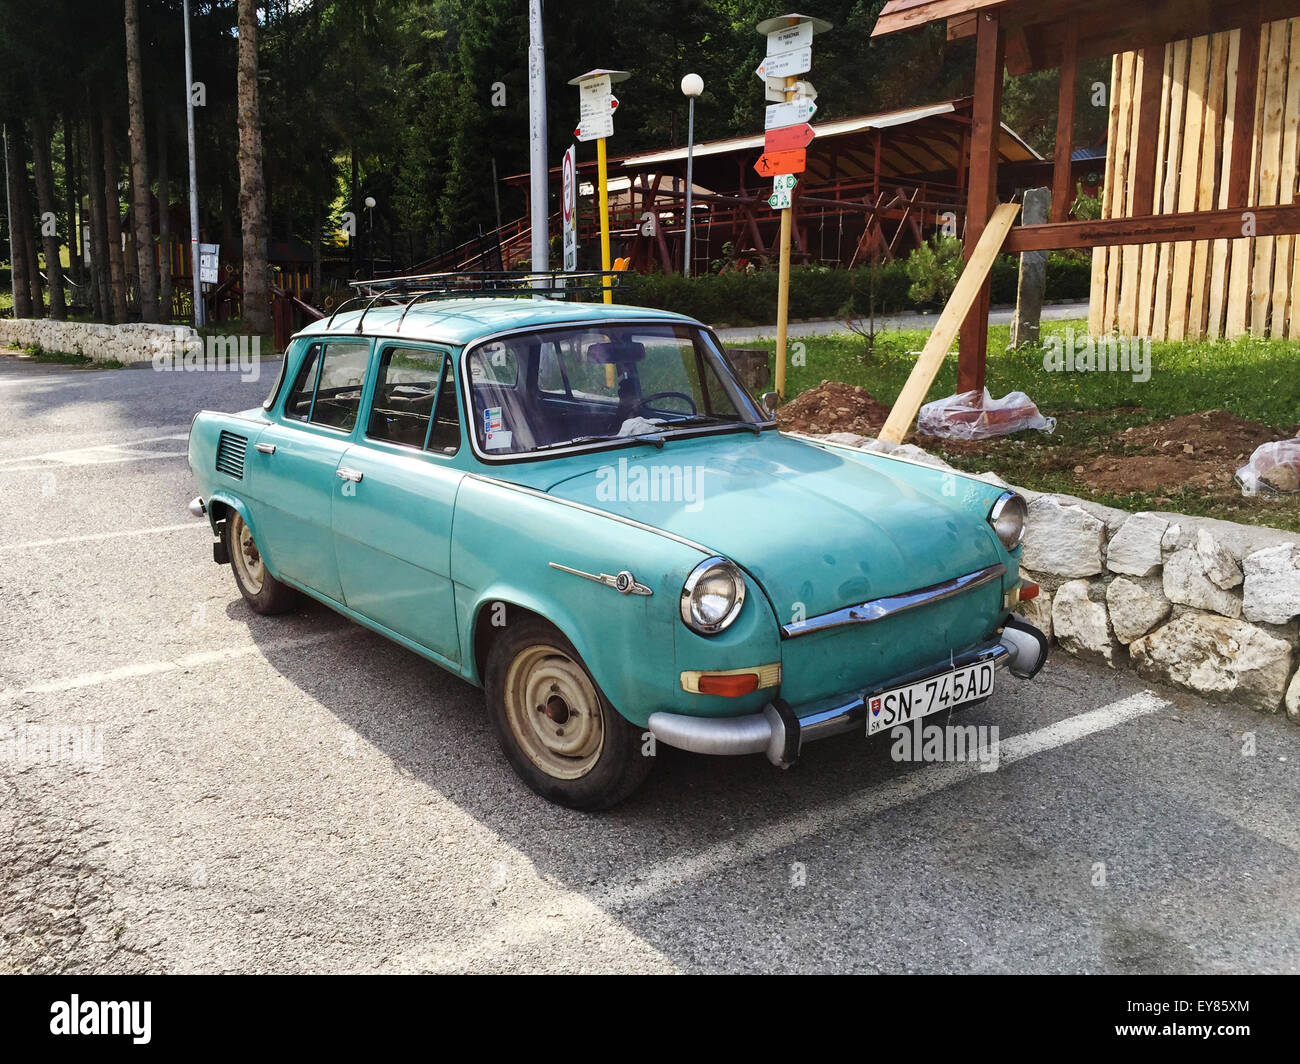 Skoda car, historical, vintage, automobile, street Stock Photo